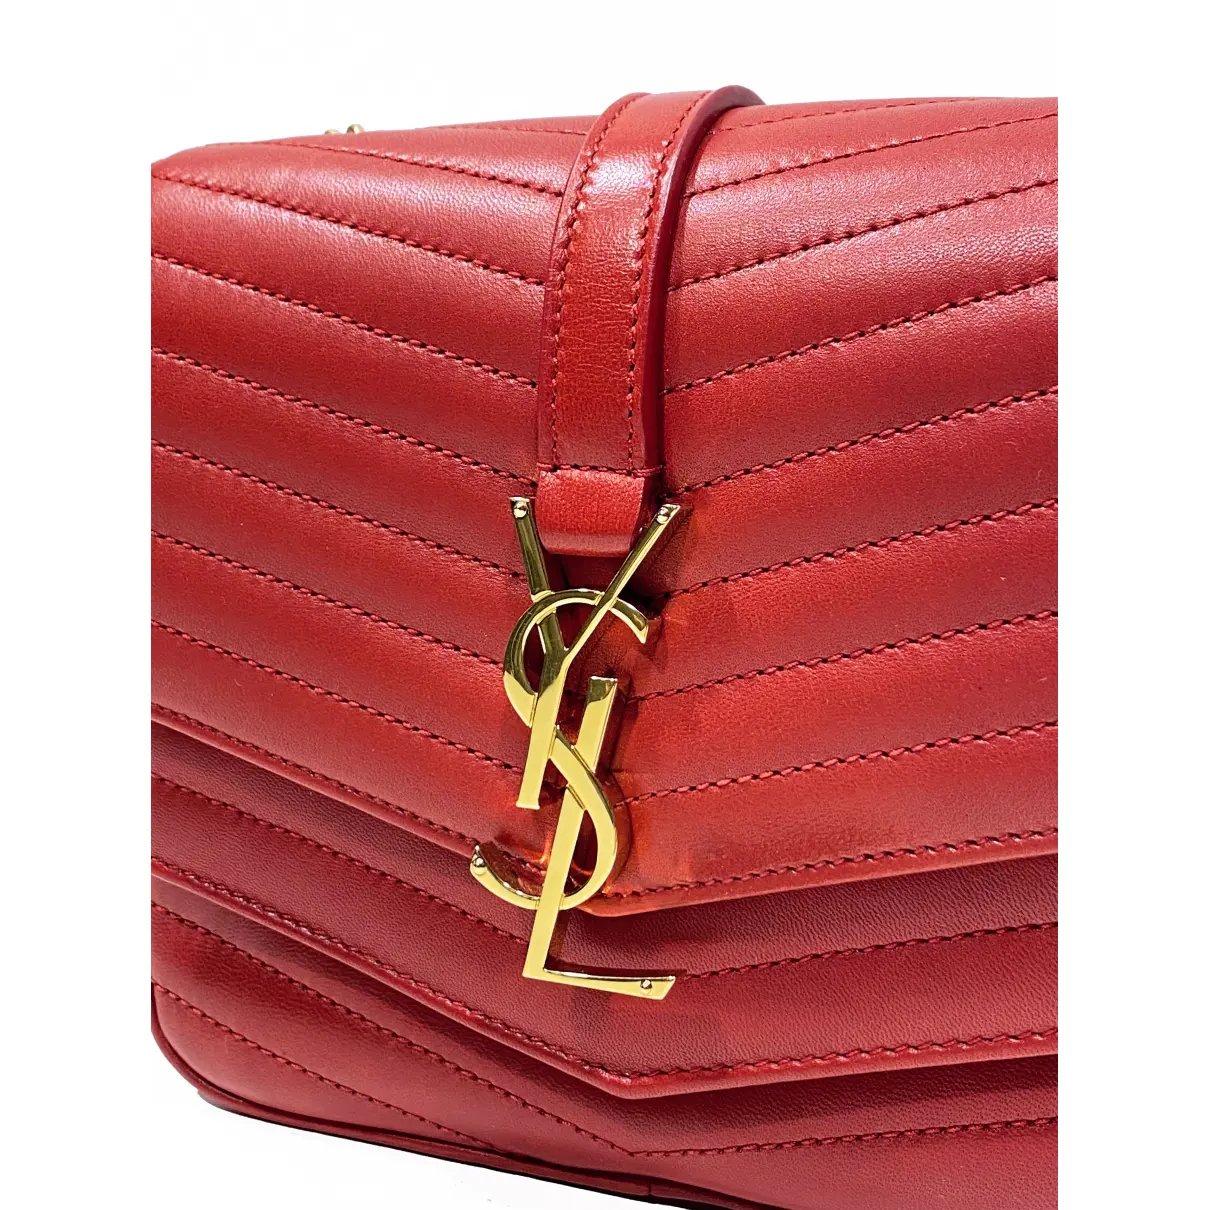 Sulpice leather handbag Saint Laurent